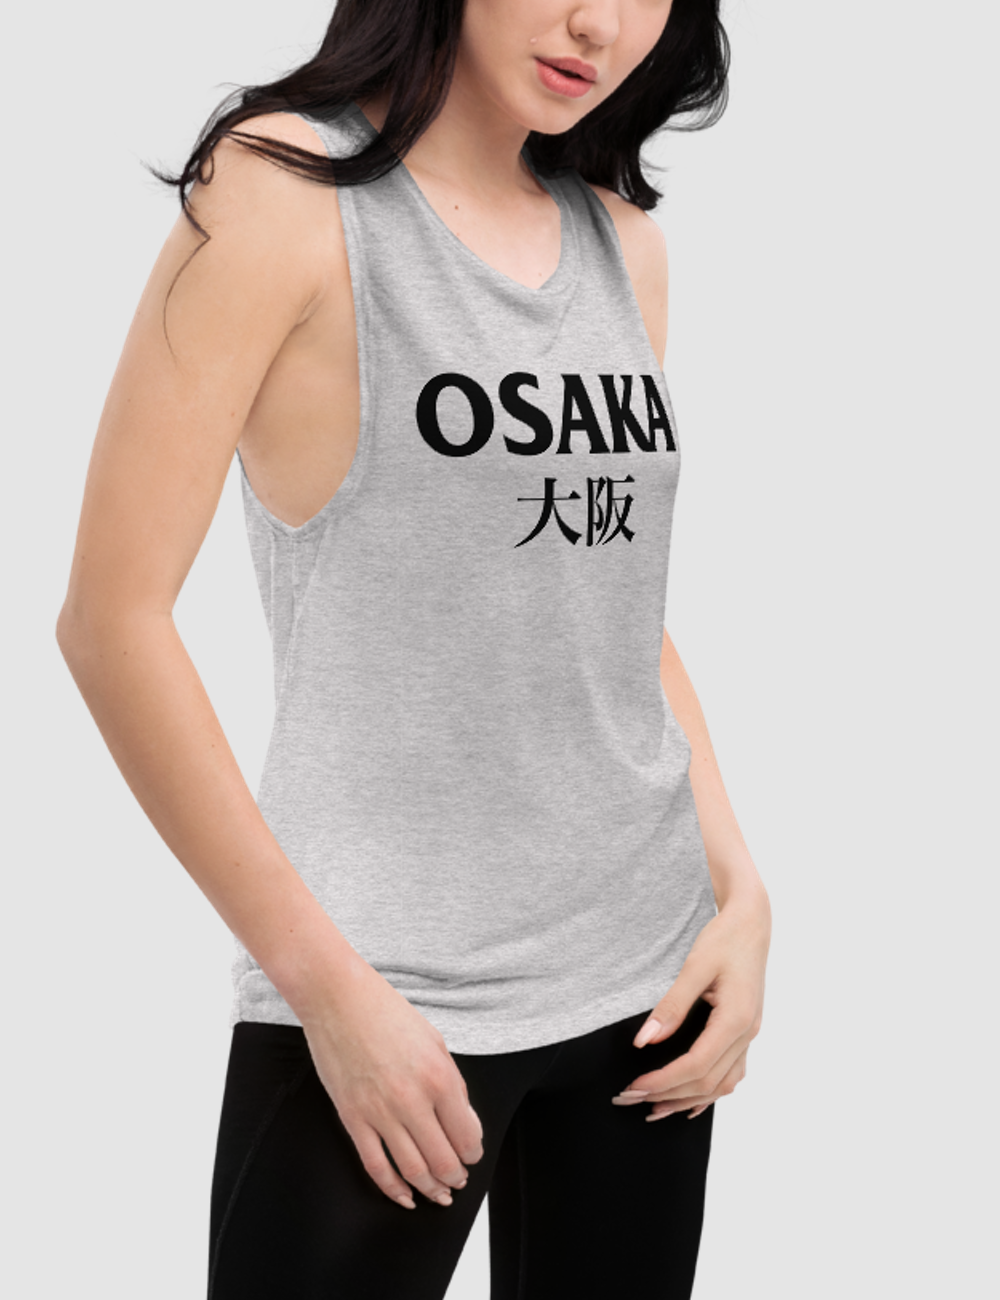 Osaka Women's Muscle Tank Top OniTakai